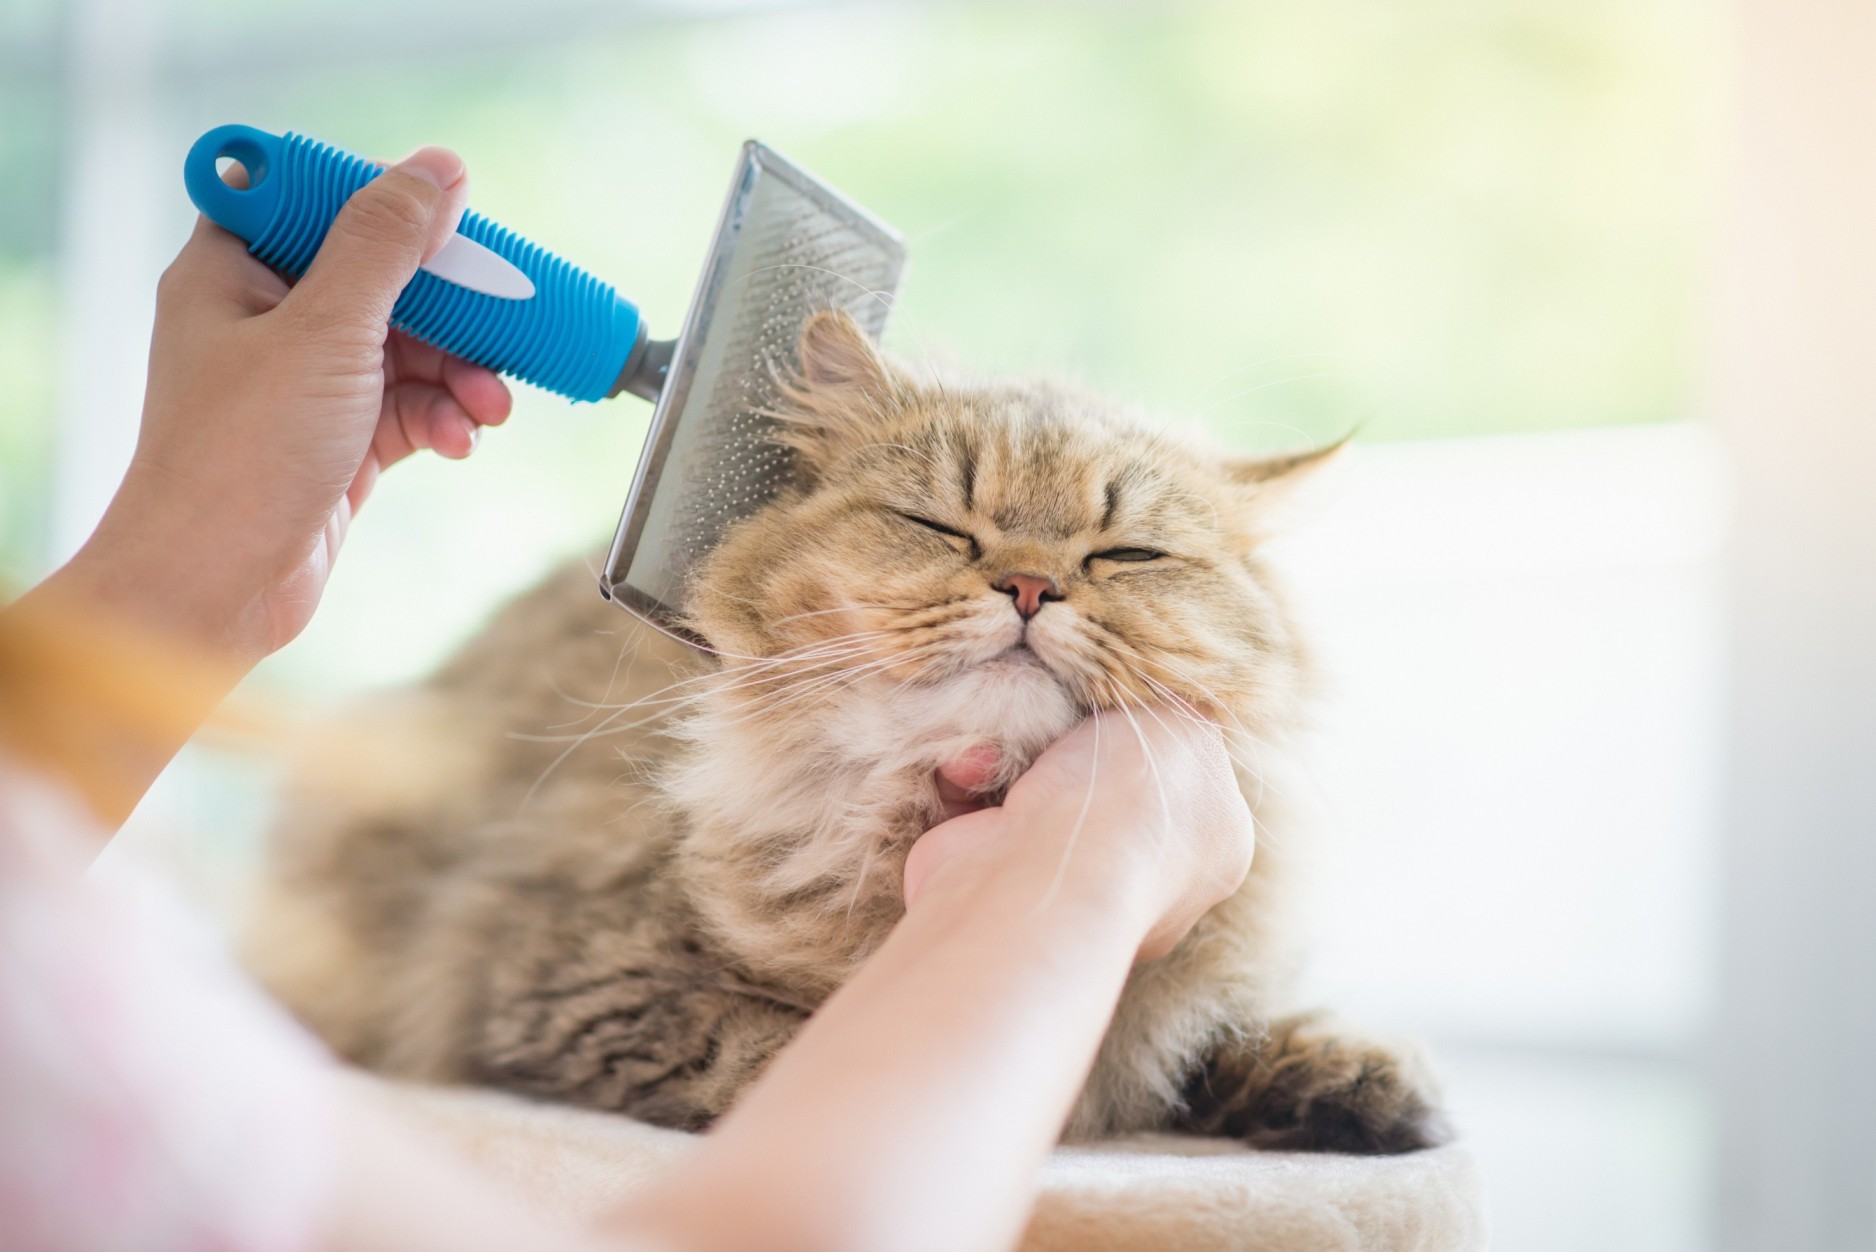 A woman brushing a cat's fur